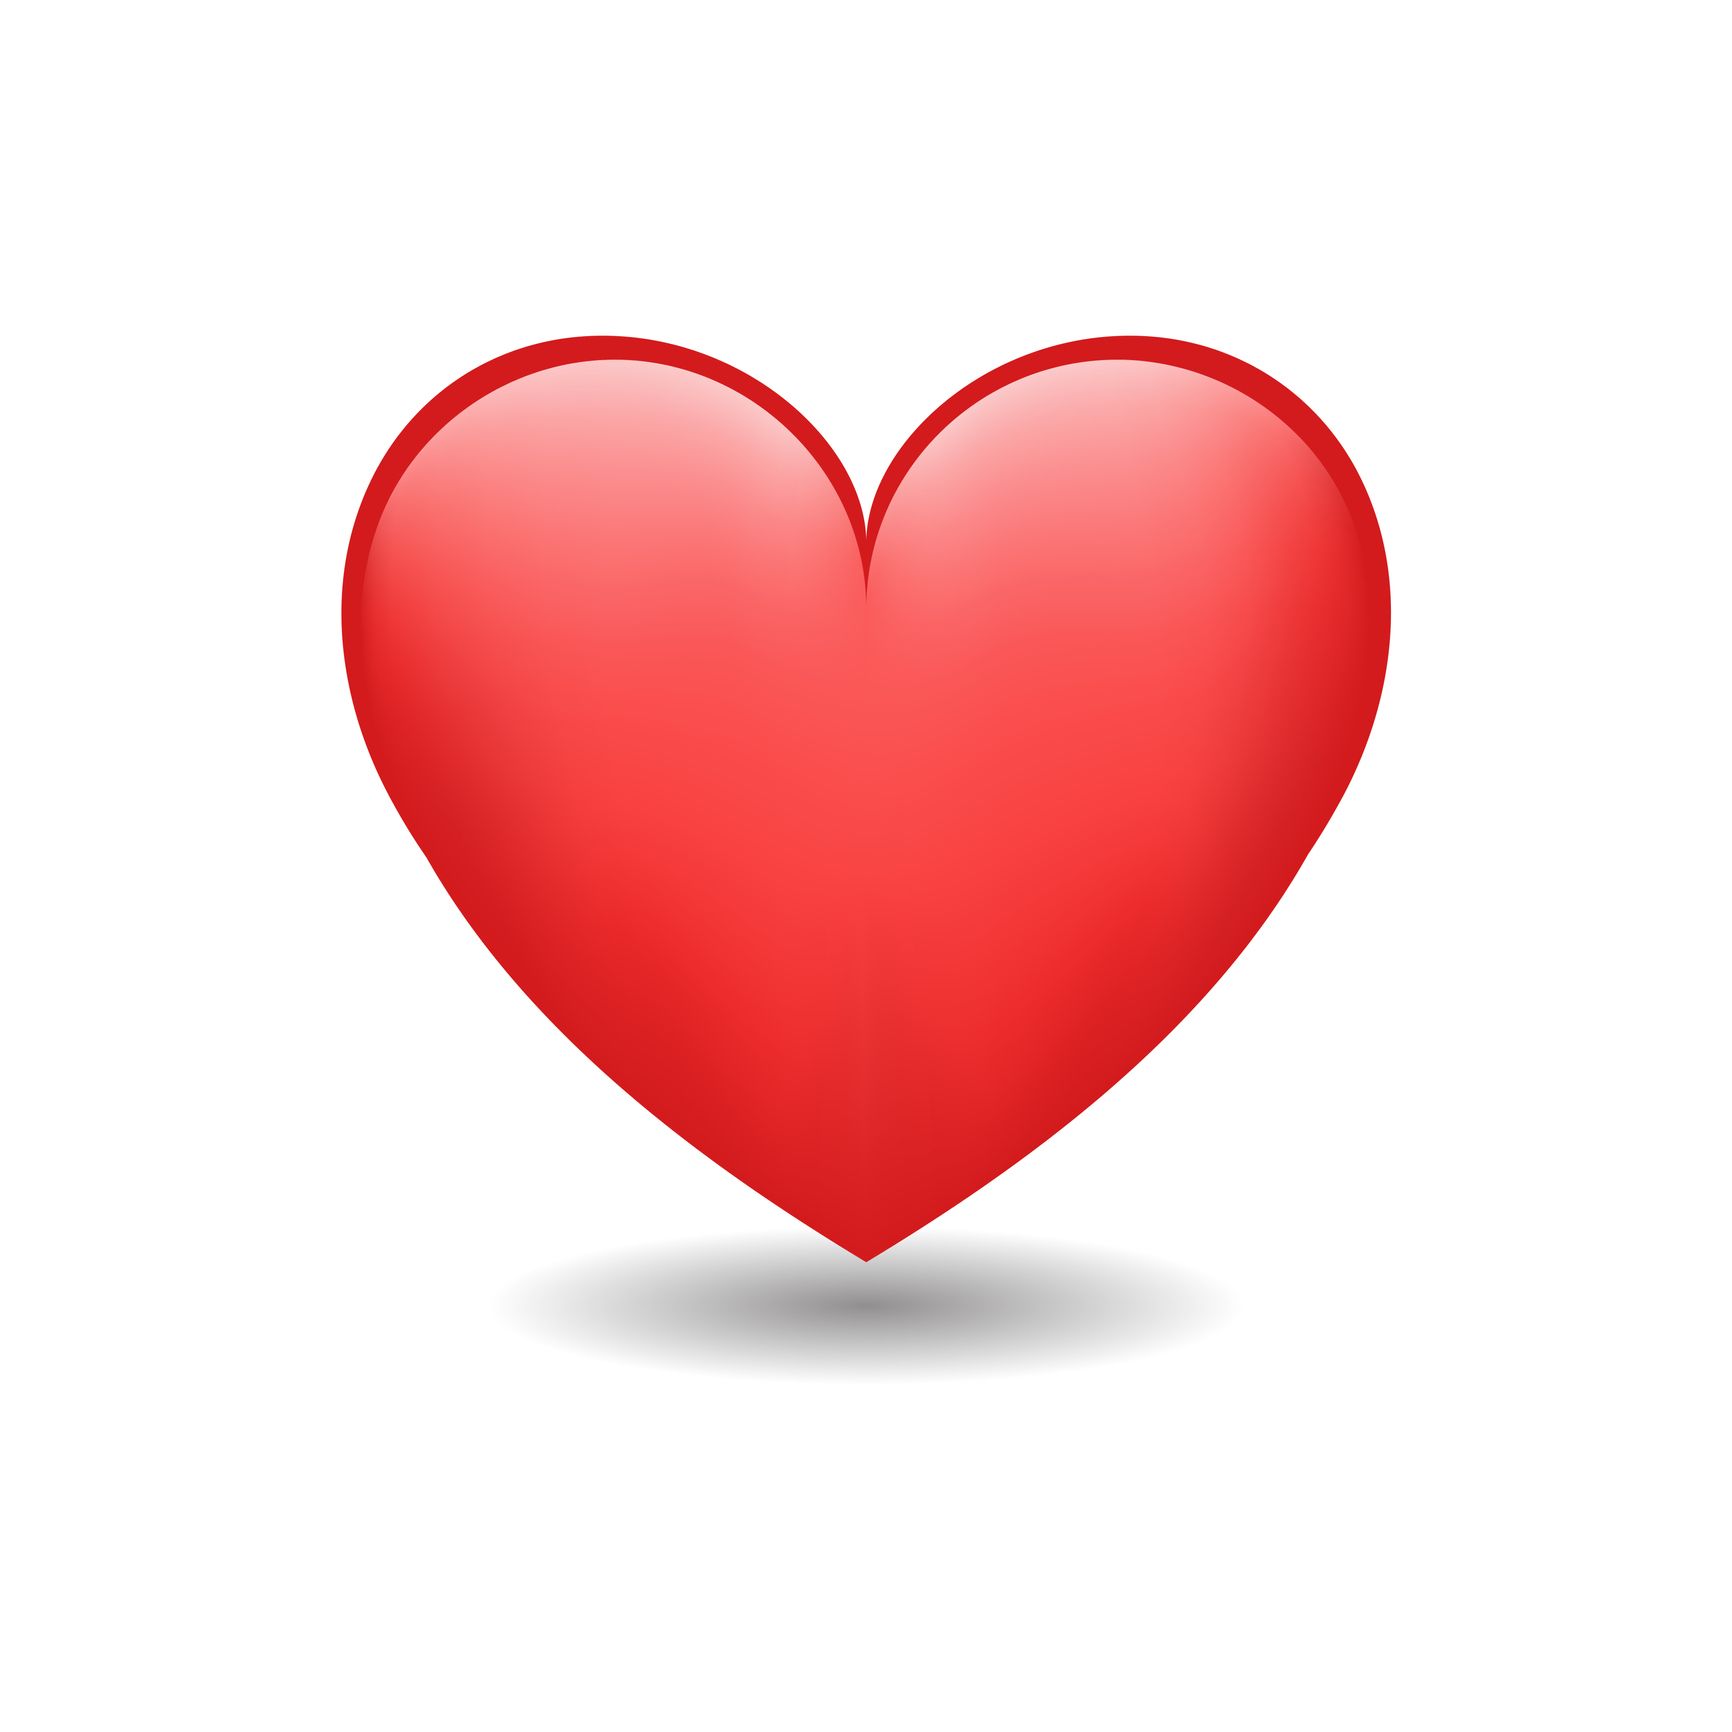 112 new emoji coming via Emoji 14.0 update; Heart Hands to Pregnant Man,  check list | Tech News